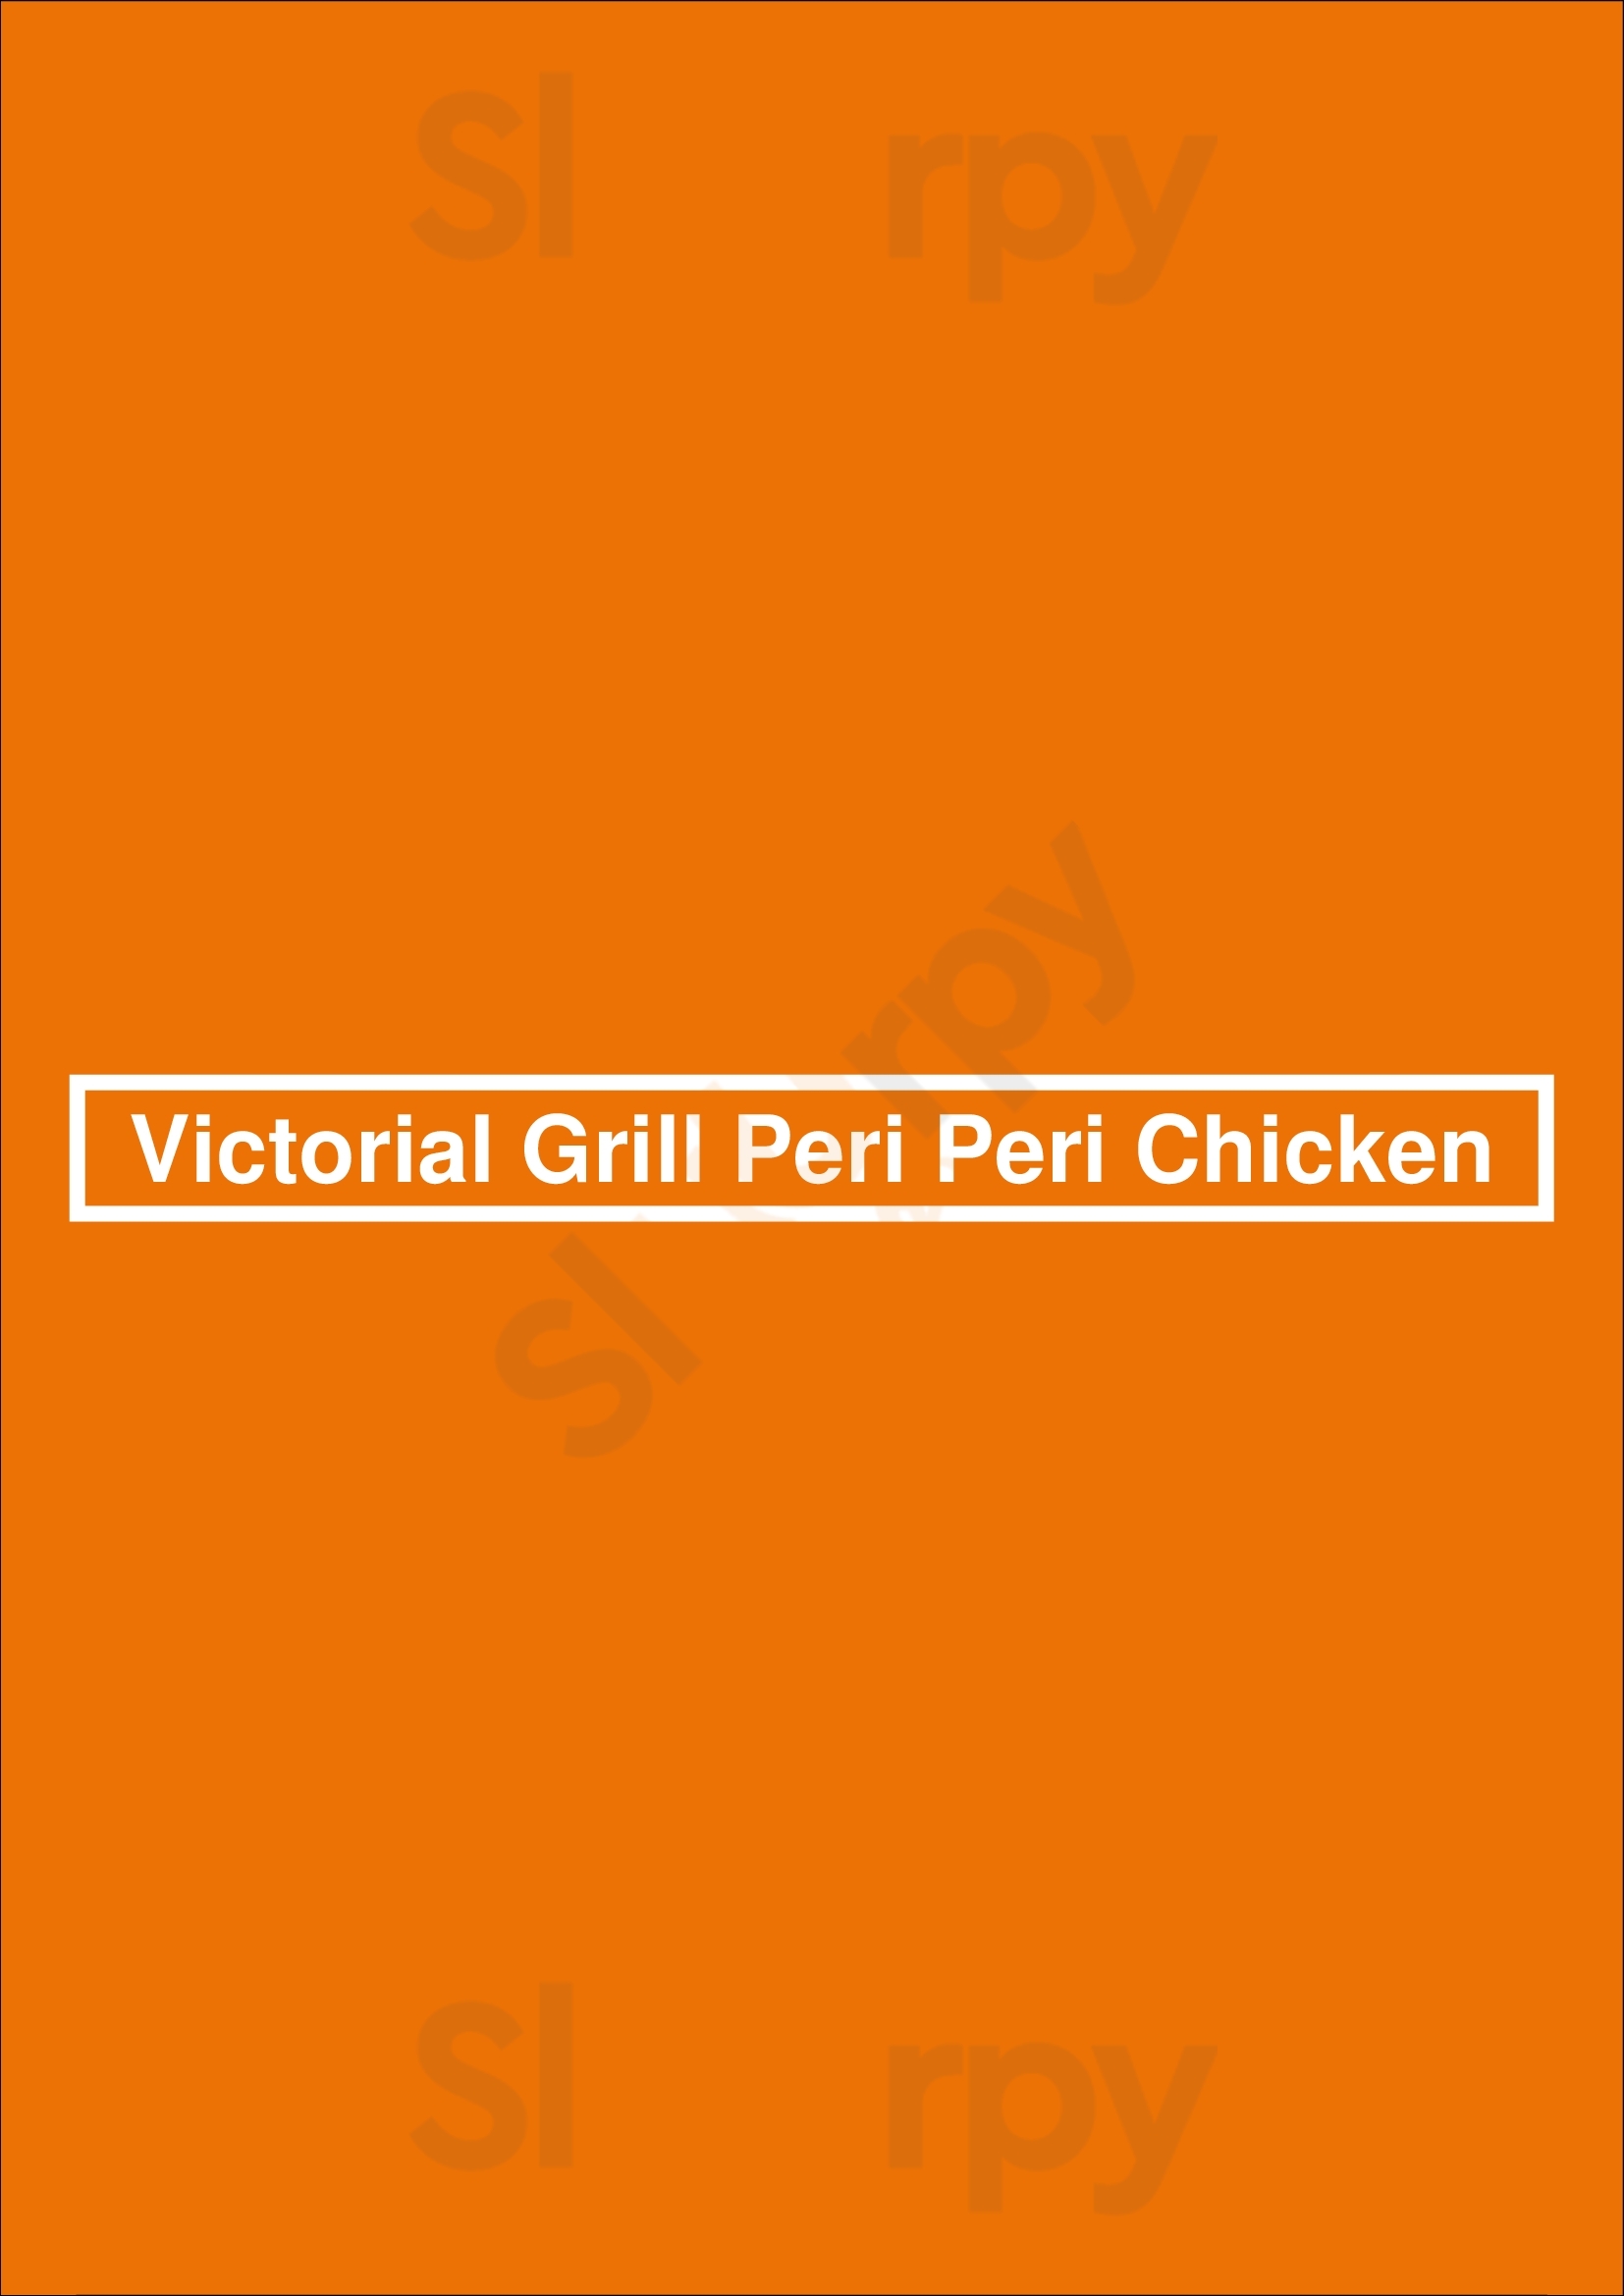 Victorial Grill Peri Peri Chicken Richmond-upon-Thames Menu - 1